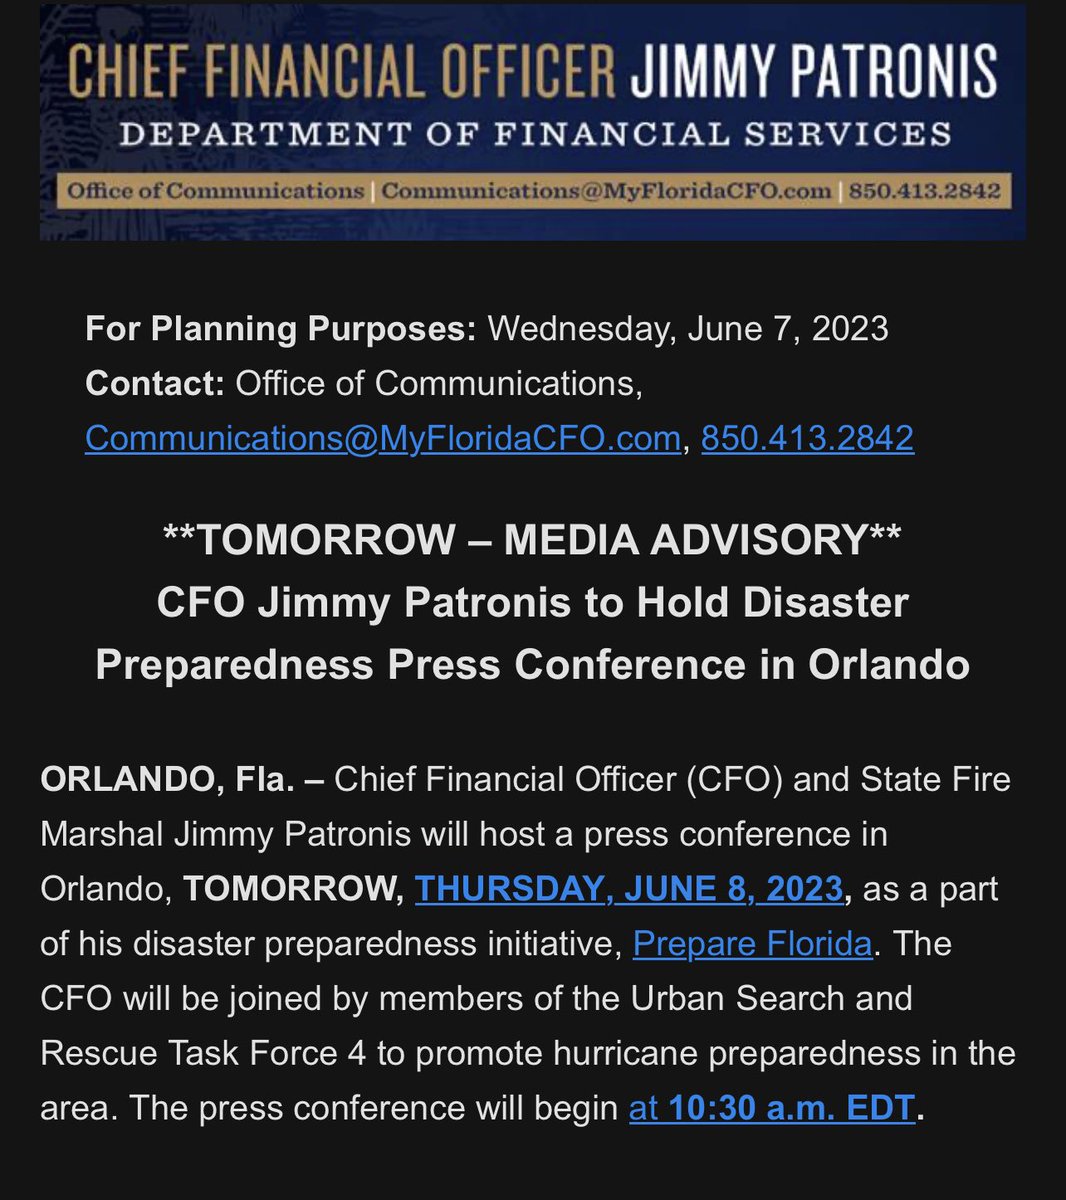 CFO @JimmyPatronis in Orlando tomorrow for a hurricane preparedness event. We’re seven days into Hurricane Season. Have a plan! No excuses!